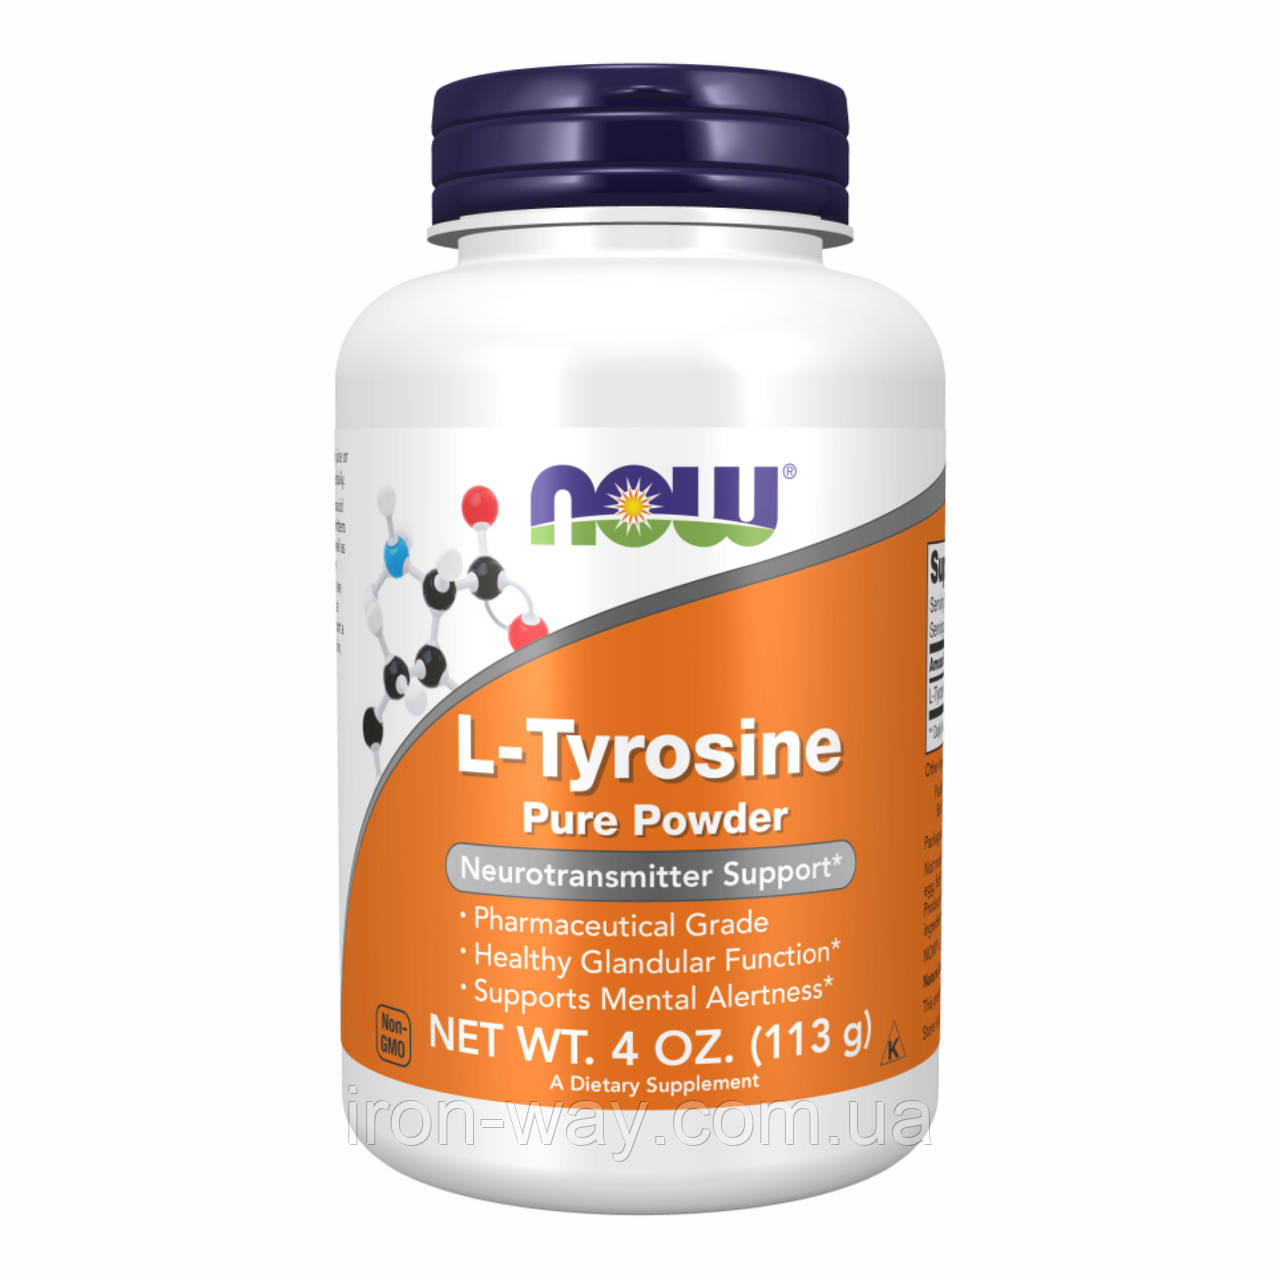 L-Tyrosine Powder - 113g